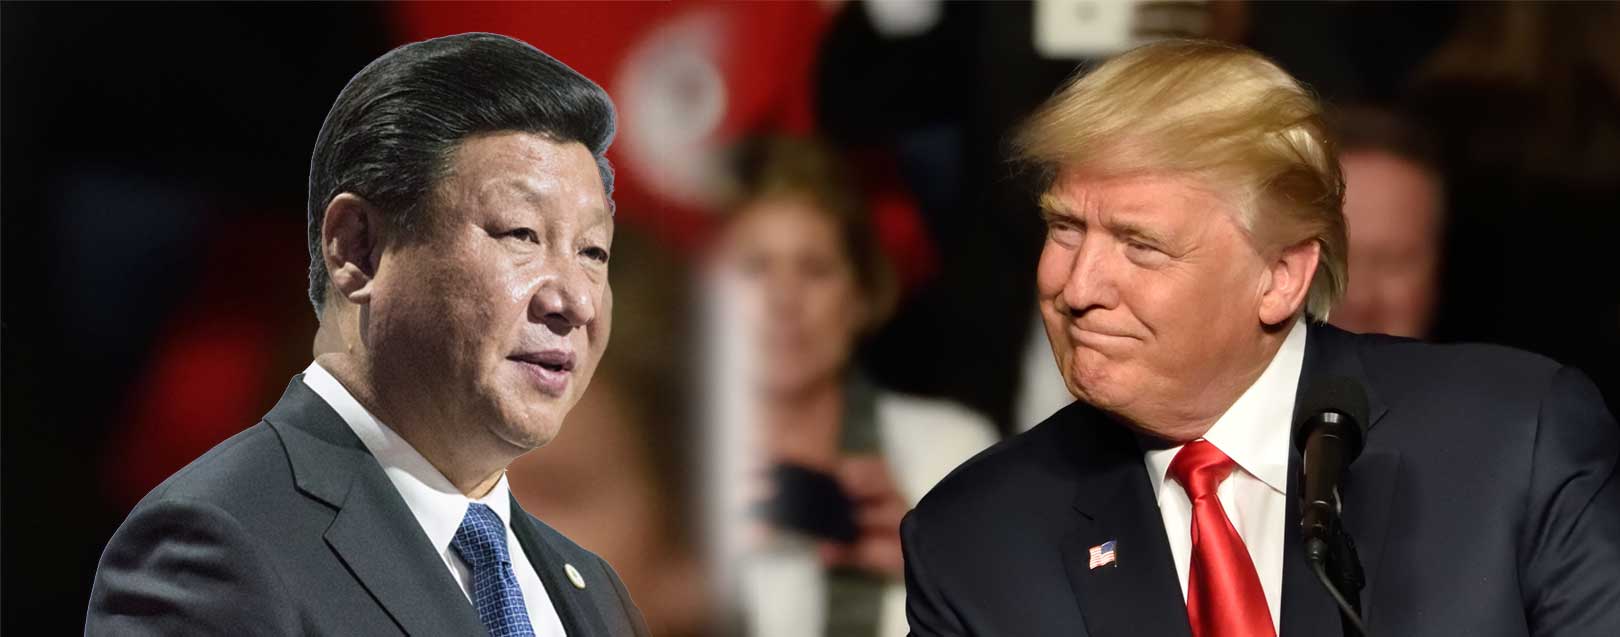 Xi to meet Trump in Florida next week